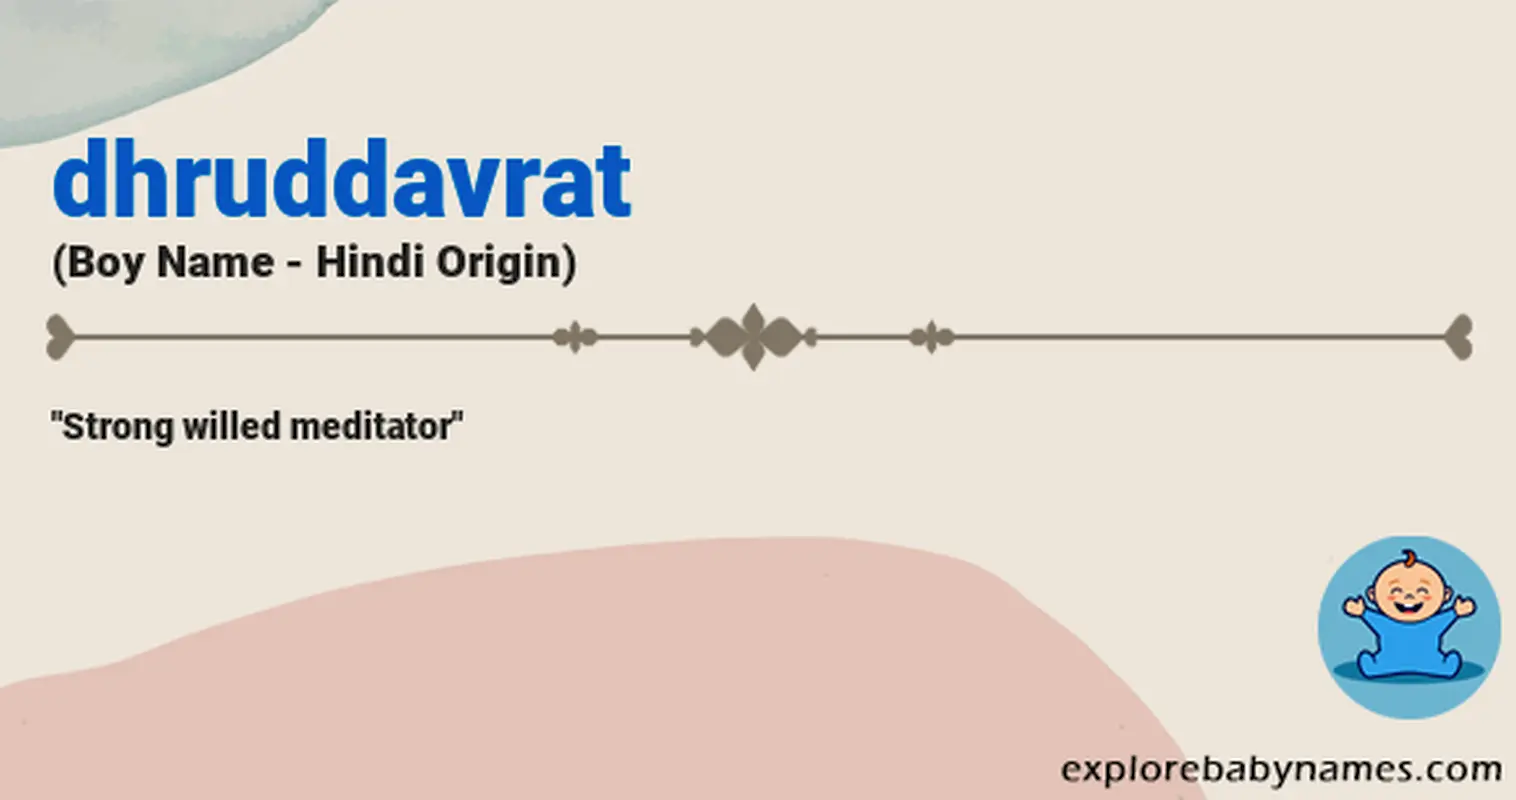 Meaning of Dhruddavrat